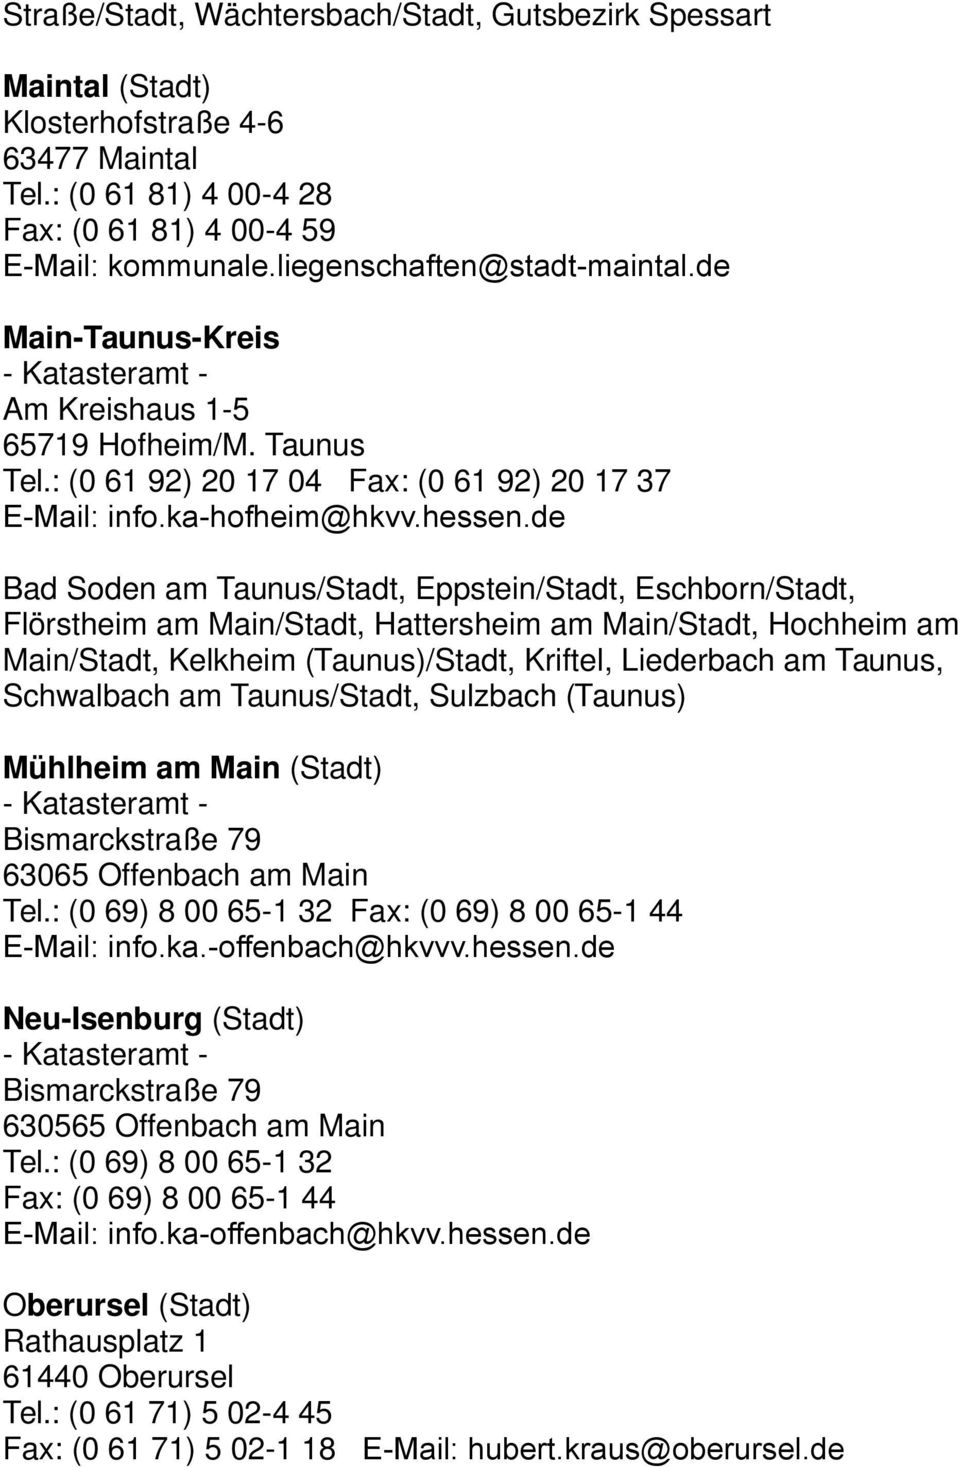 de Bad Soden am Taunus/Stadt, Eppstein/Stadt, Eschborn/Stadt, Flörstheim am Main/Stadt, Hattersheim am Main/Stadt, Hochheim am Main/Stadt, Kelkheim (Taunus)/Stadt, Kriftel, Liederbach am Taunus,